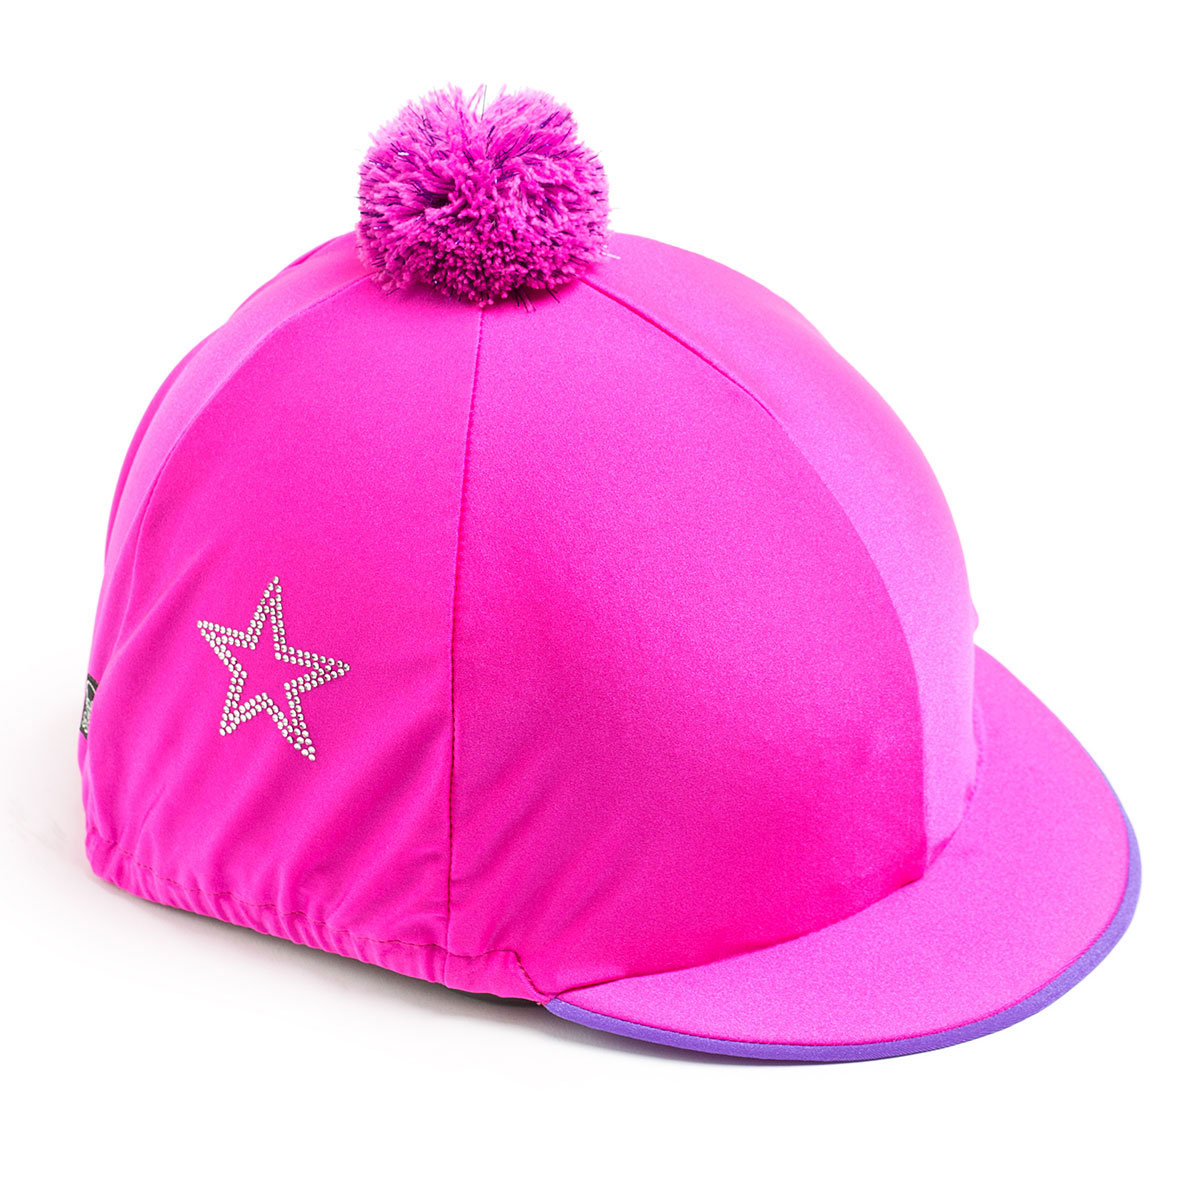 Carrots Plain Pink Diamate Star Hat Cover